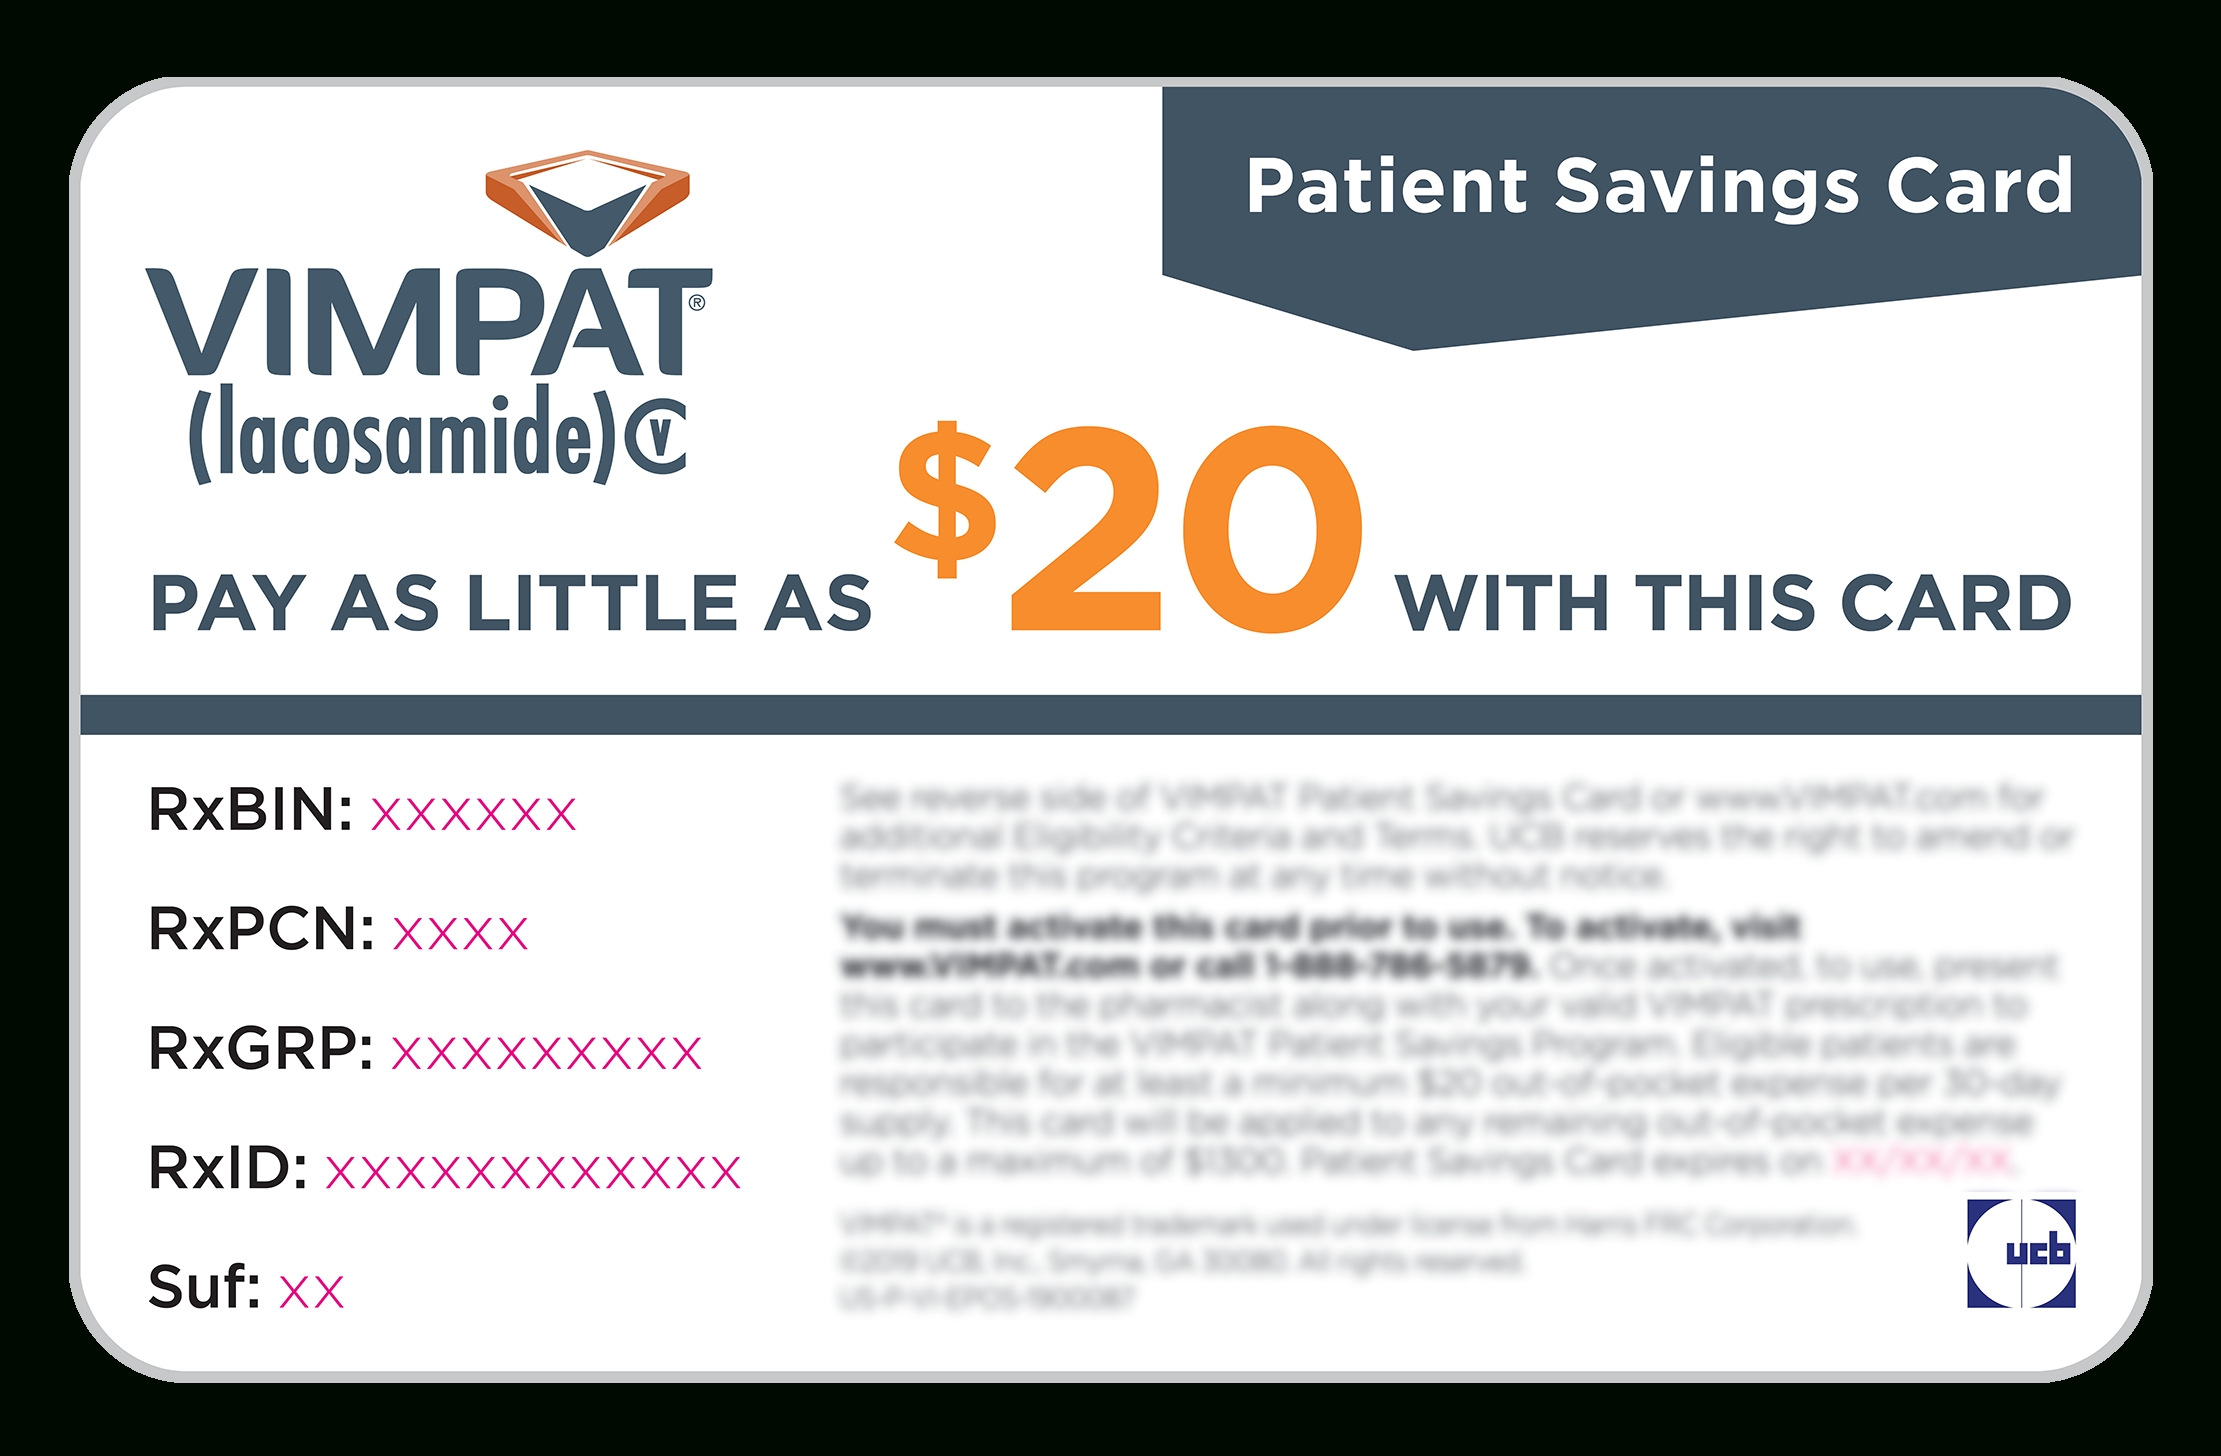 Savings Card And Support Program | Vimpat® (Lacosamide) C-V